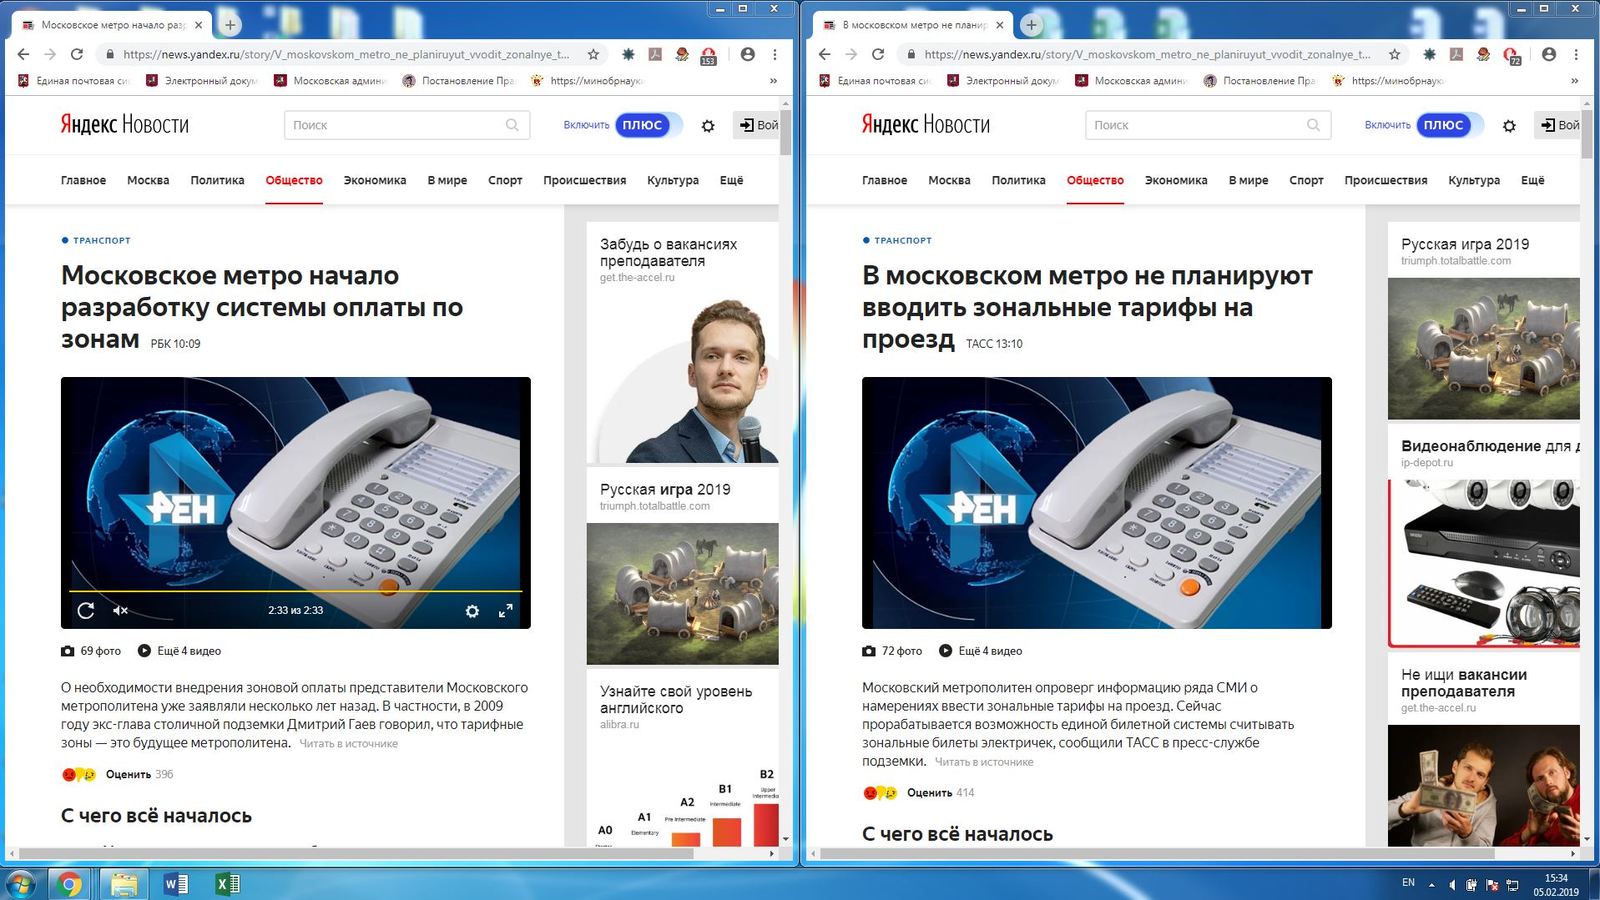 Game Find 10 differences - Yandex News, Yandex., news